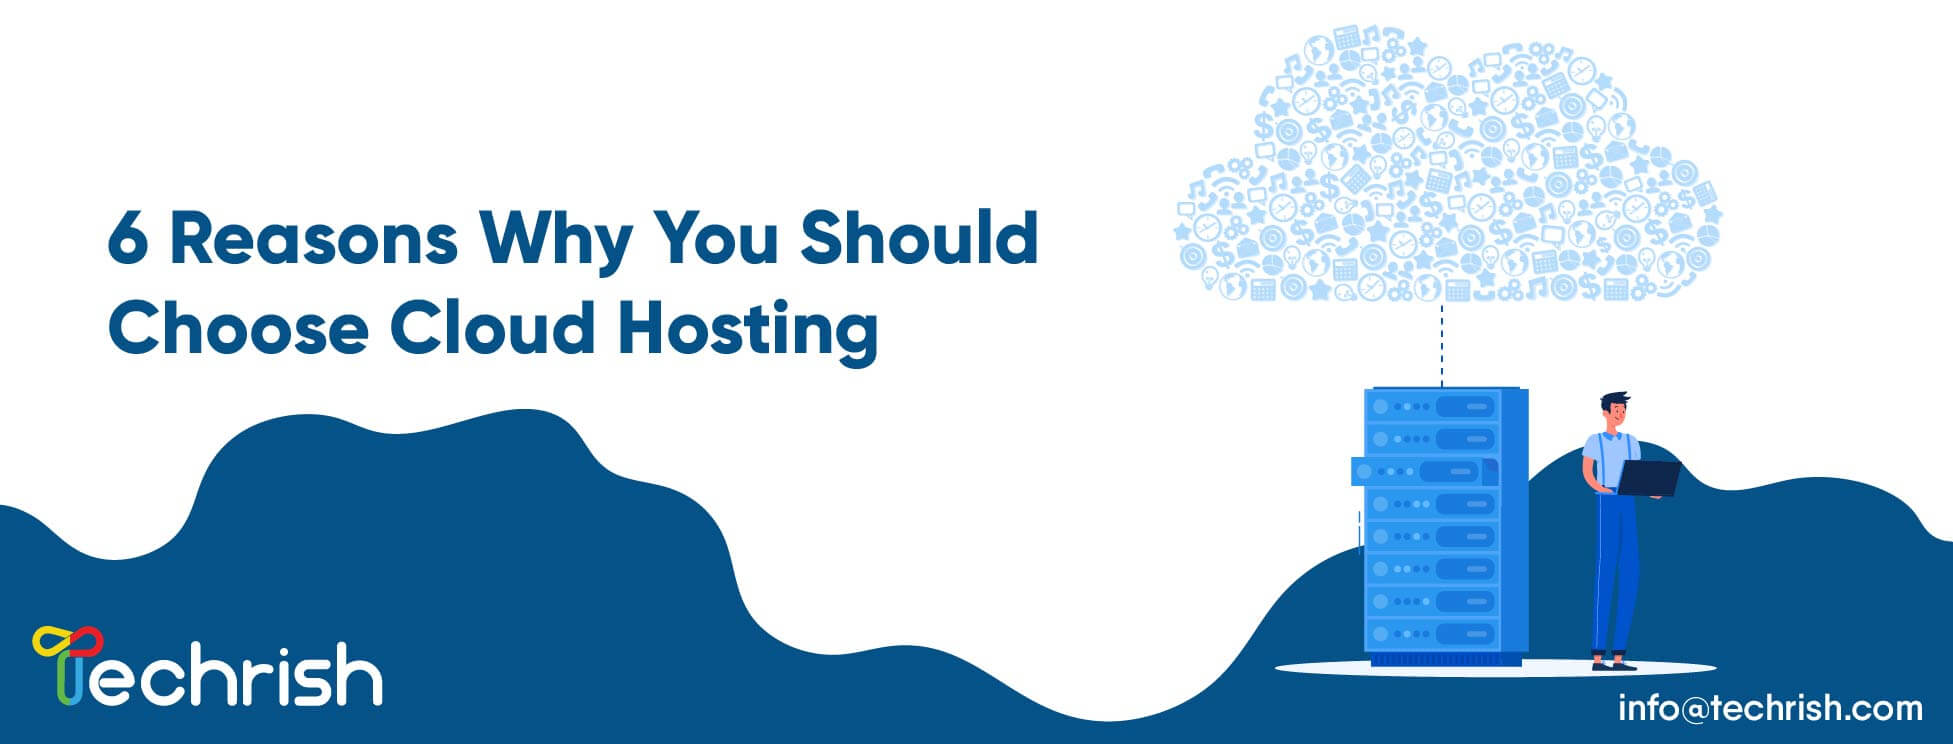 6 Reasons Why You Should Choose Cloud Hosting